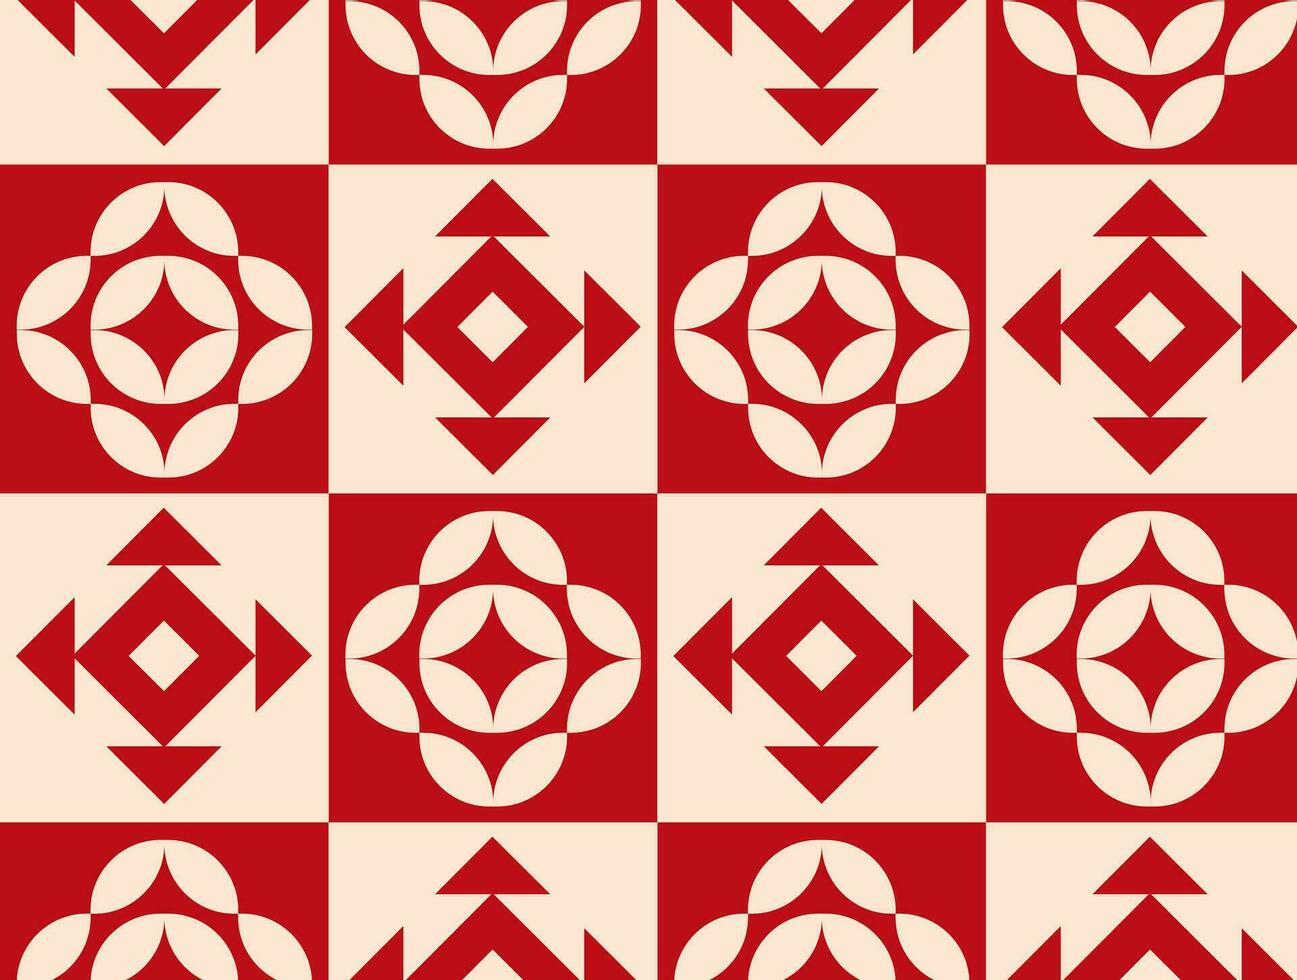 geometrisch Vektor Muster im skandinavisch Stil. Rosa und rot Farbe. Grafik Design Hintergrund Illustration.